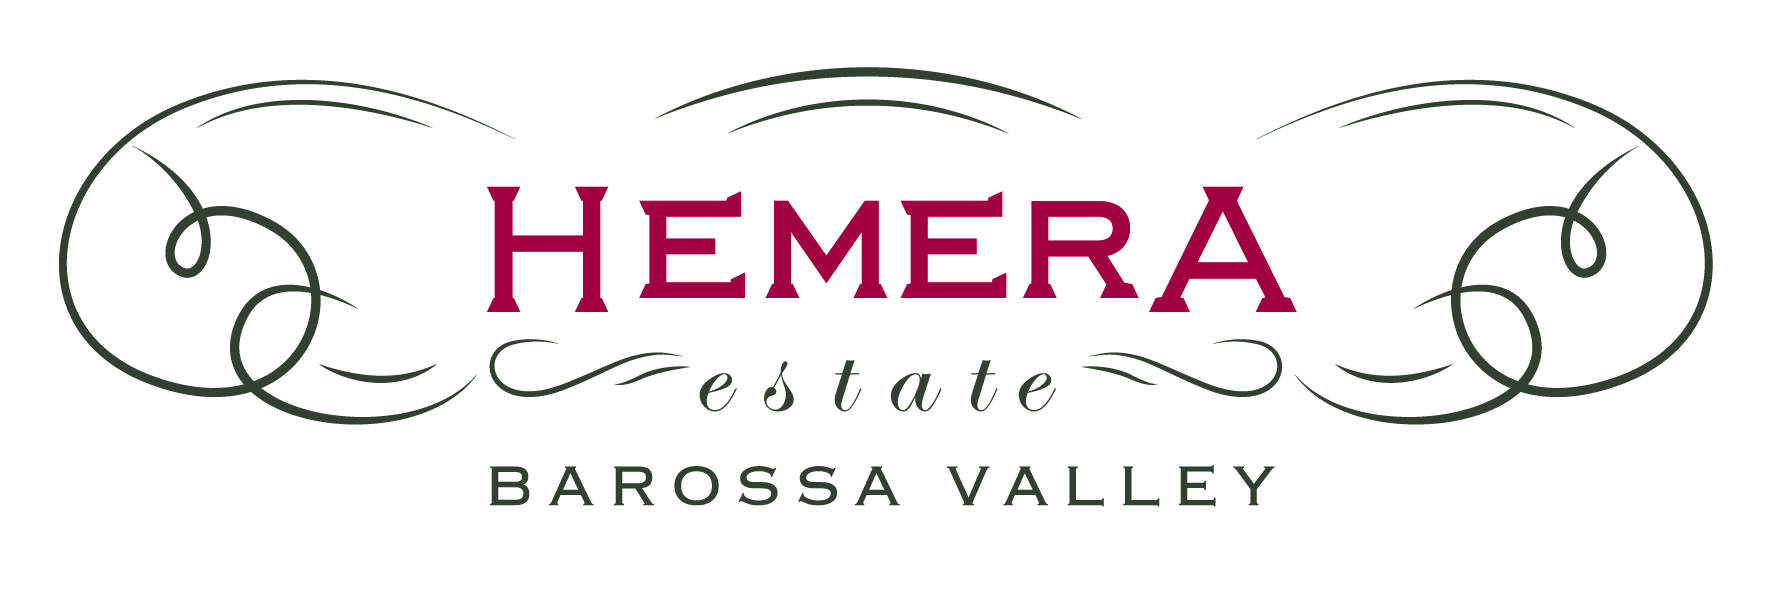 Hemera estate single vineyard